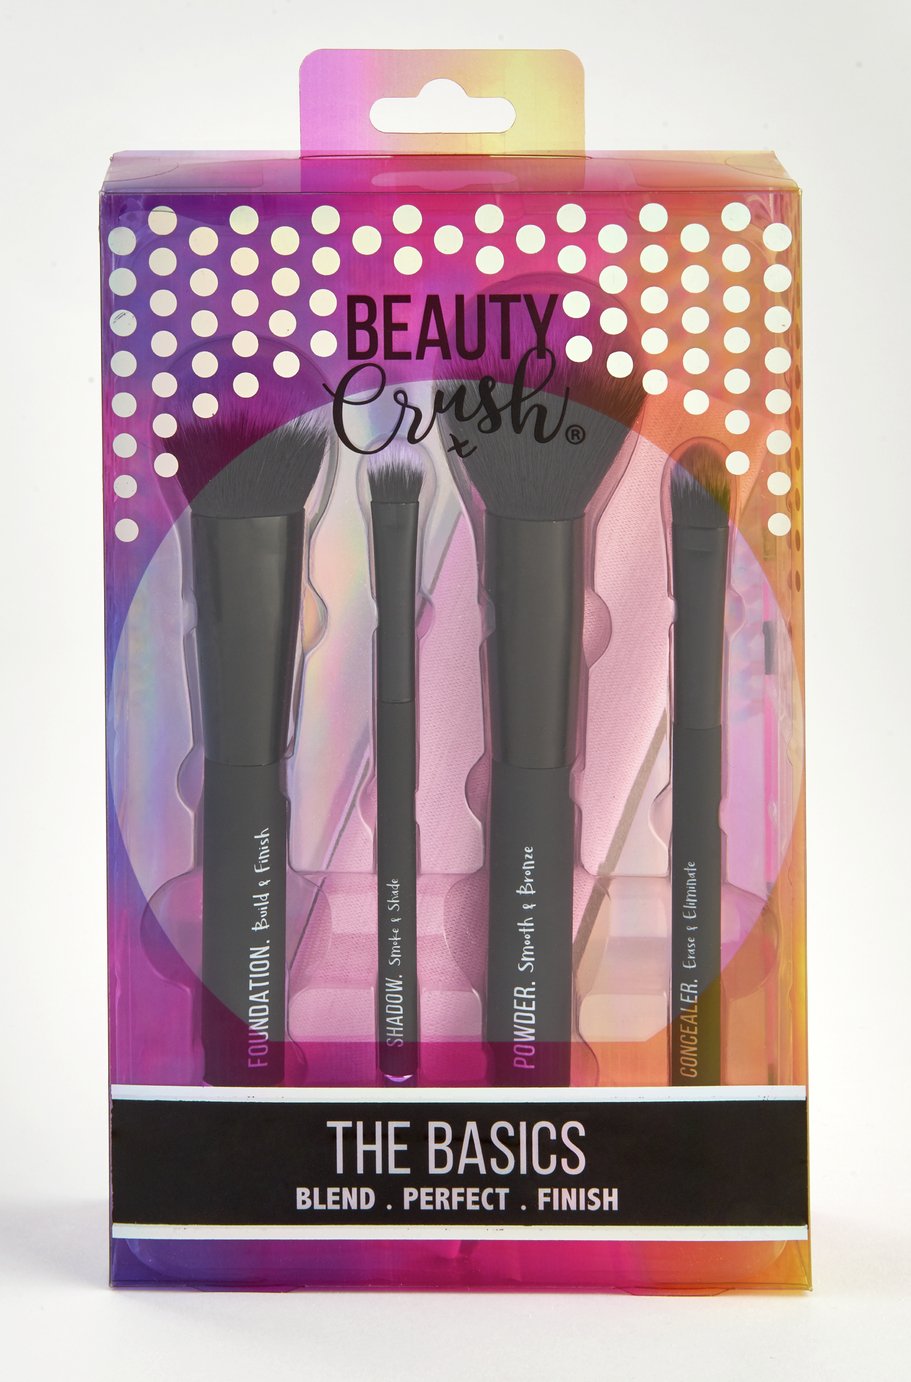 Beauty Crush - The Basics Make Up Set